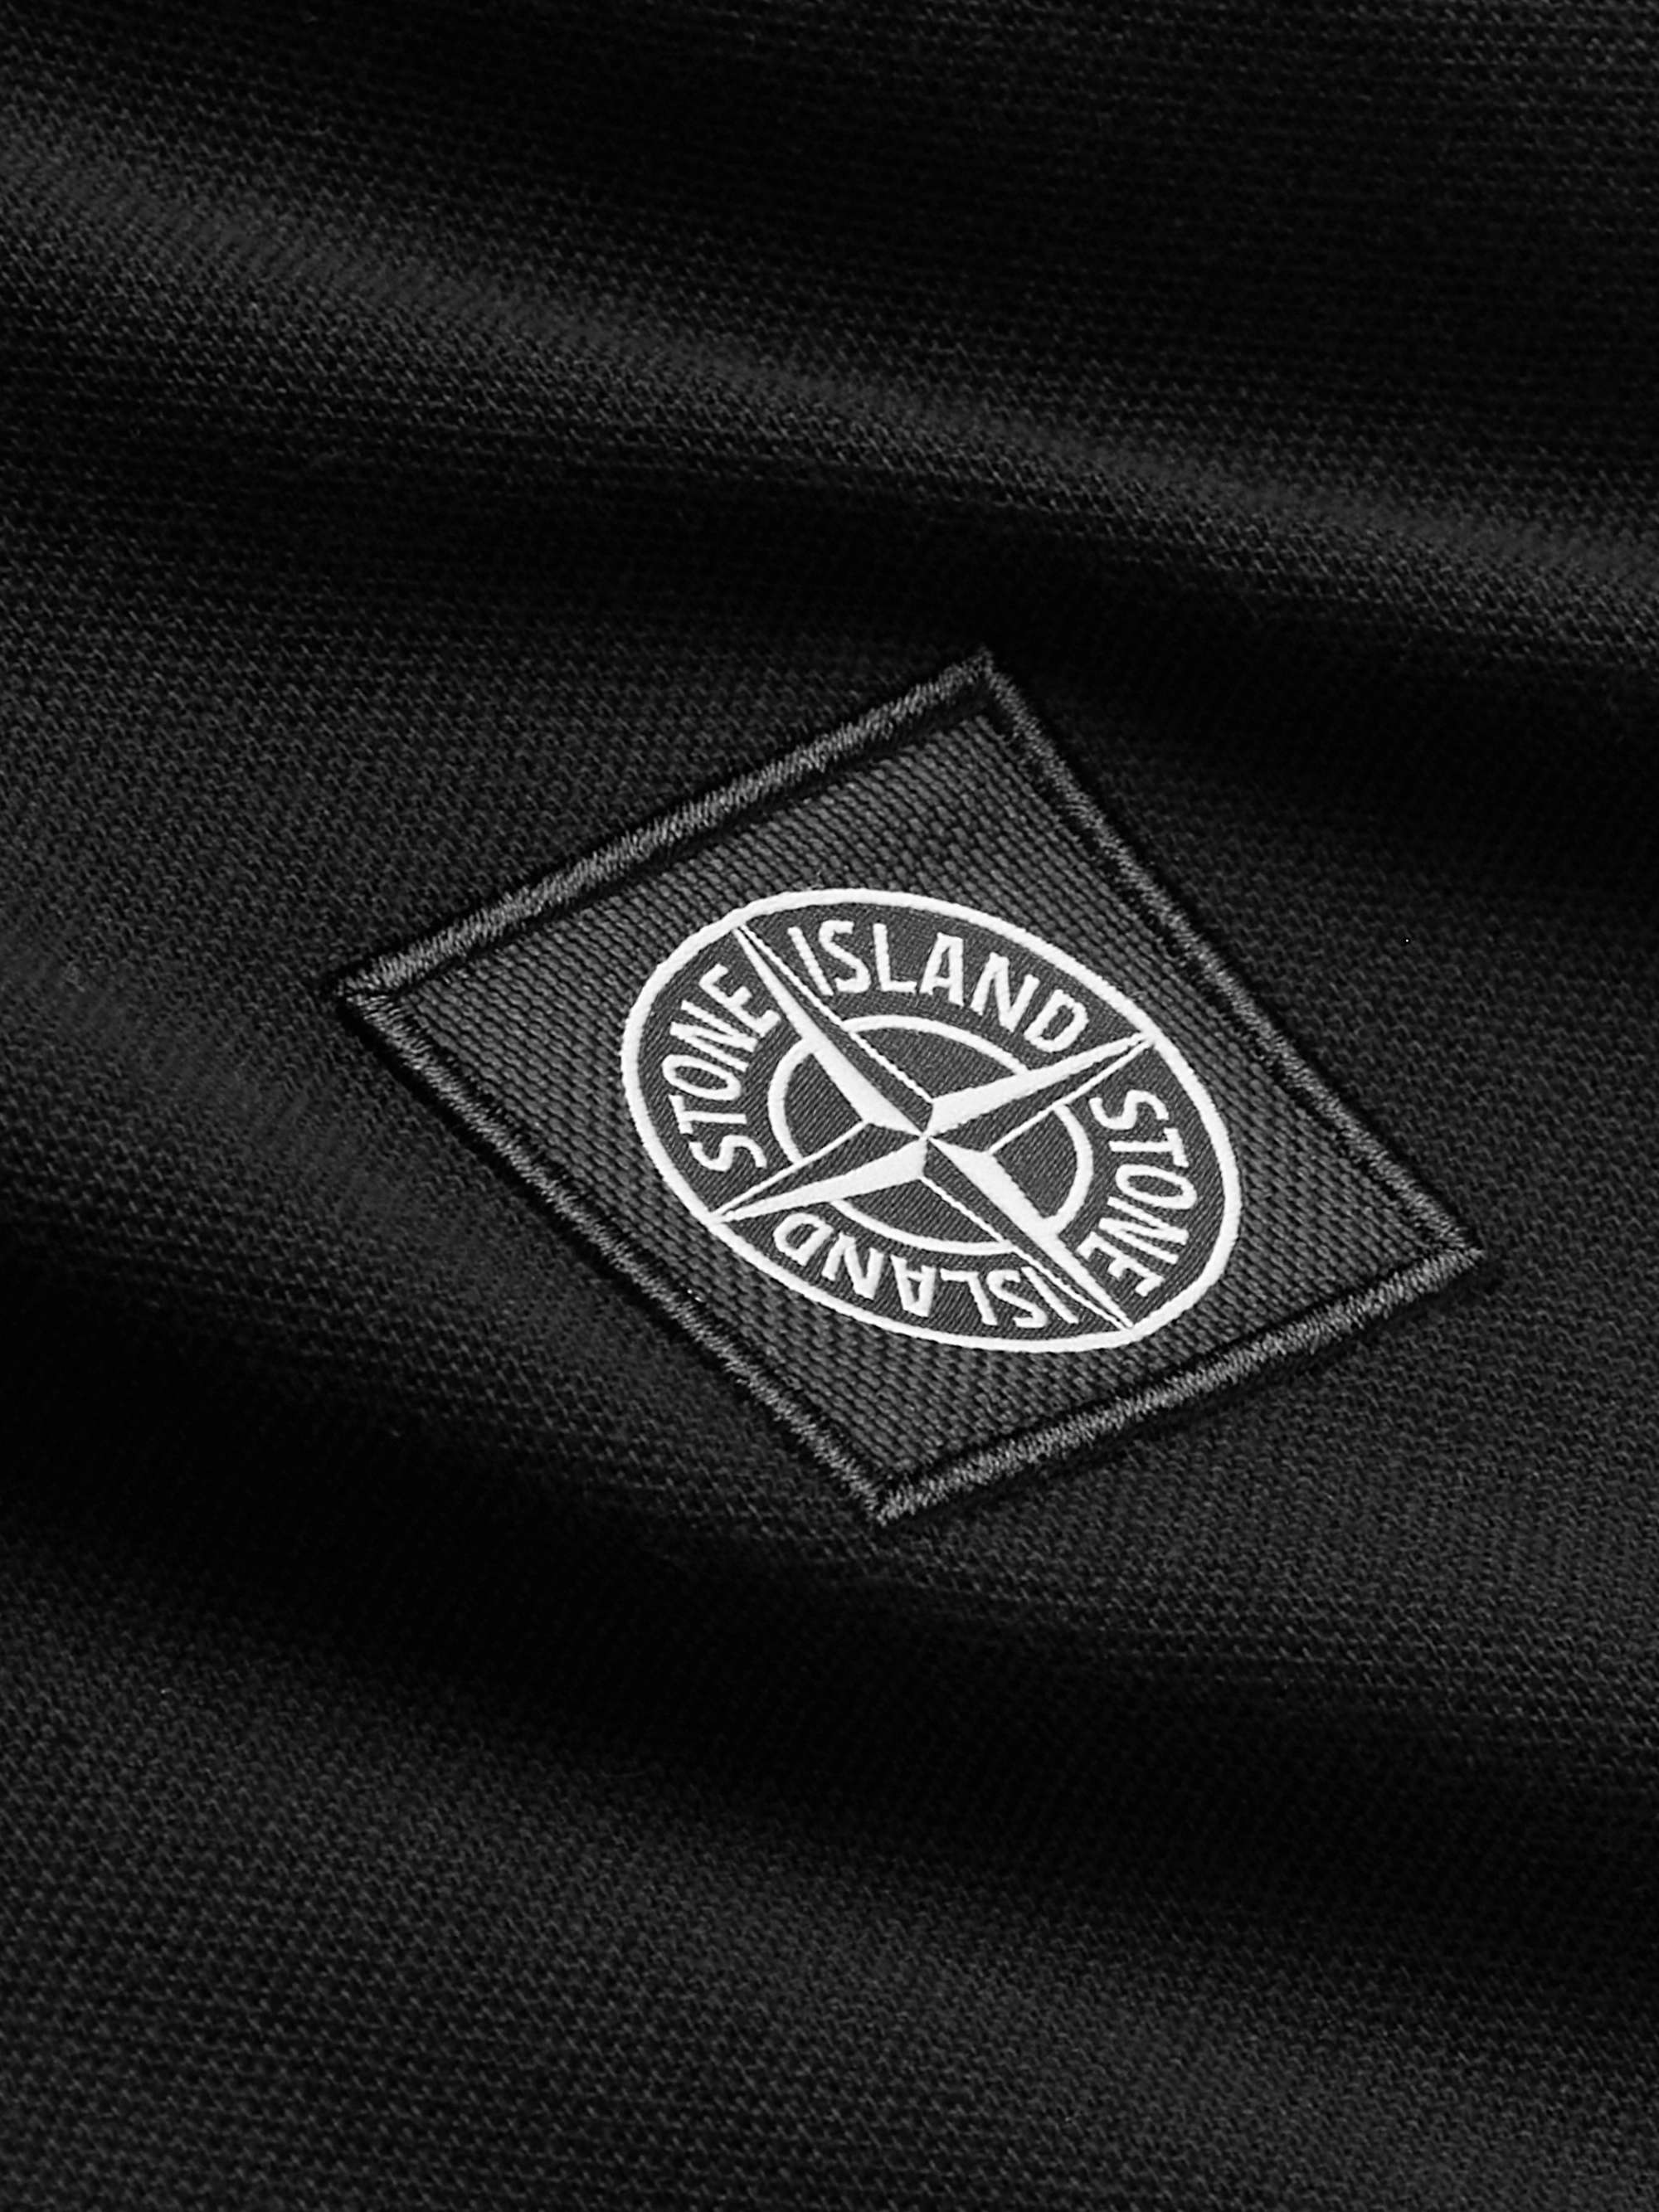 STONE ISLAND Logo-Appliquéd Stretch-Cotton Piqué Polo Shirt